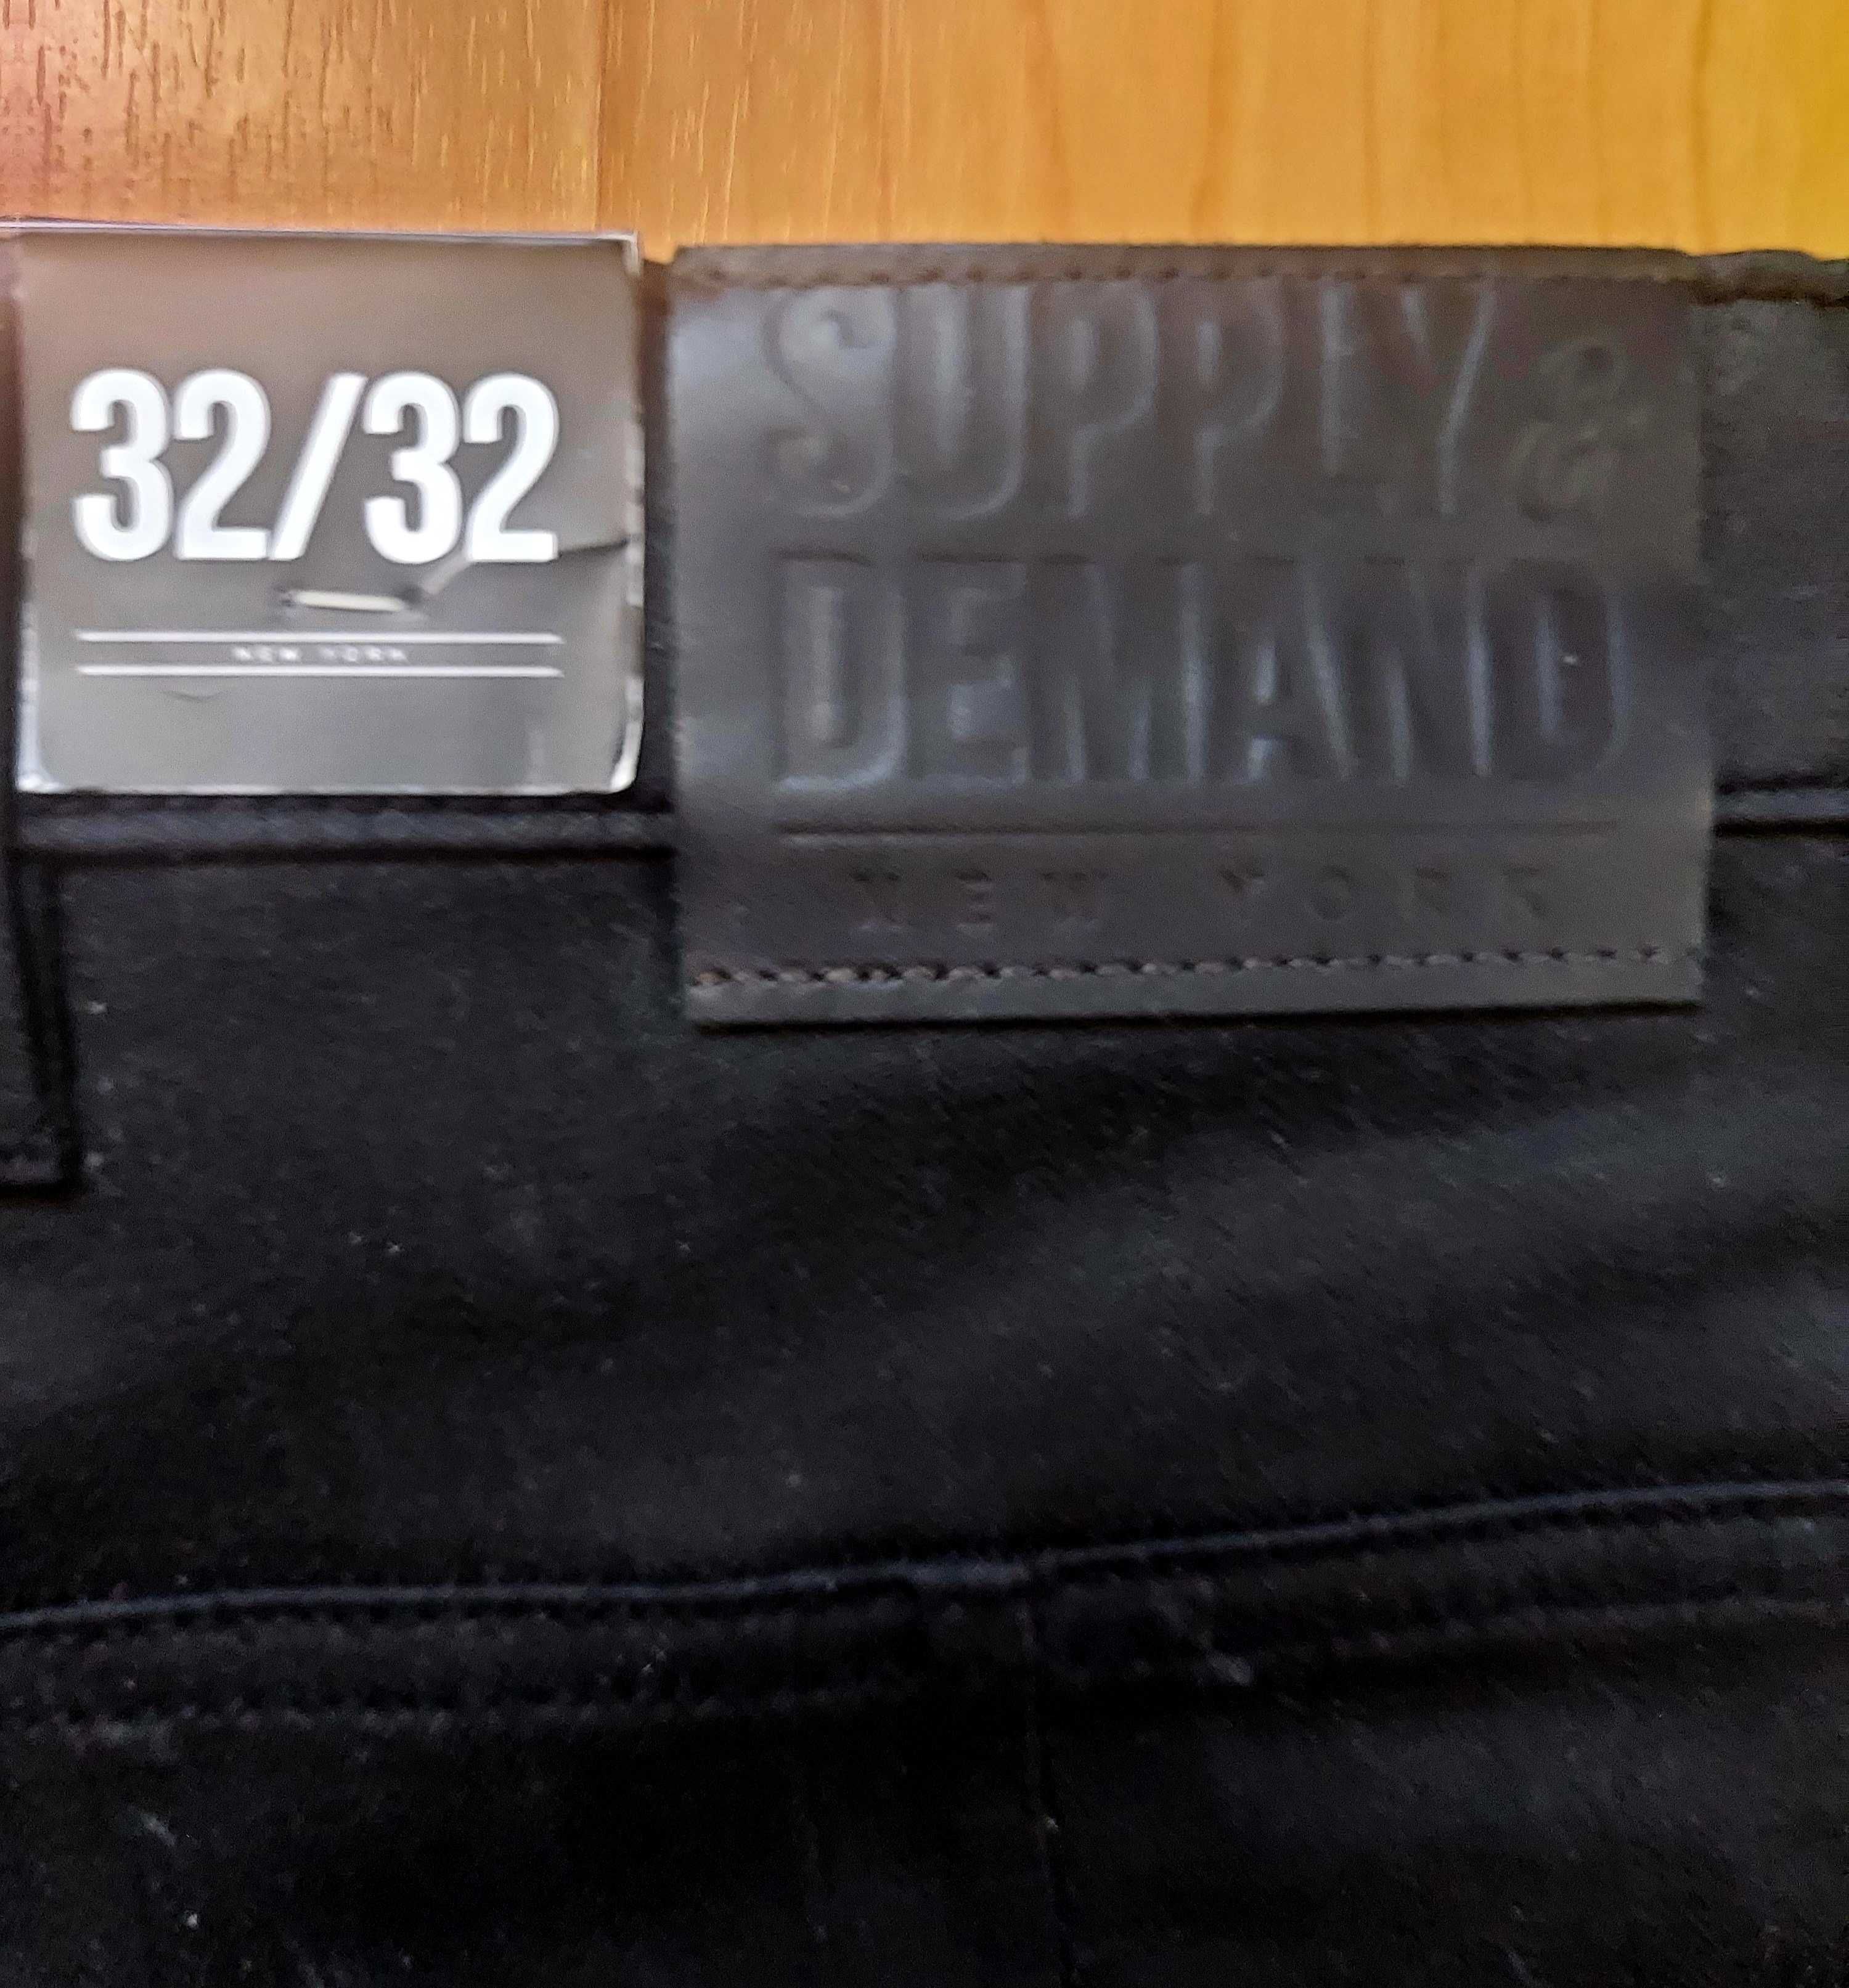 Pantaloni Supply & Demand NOI marimea  32